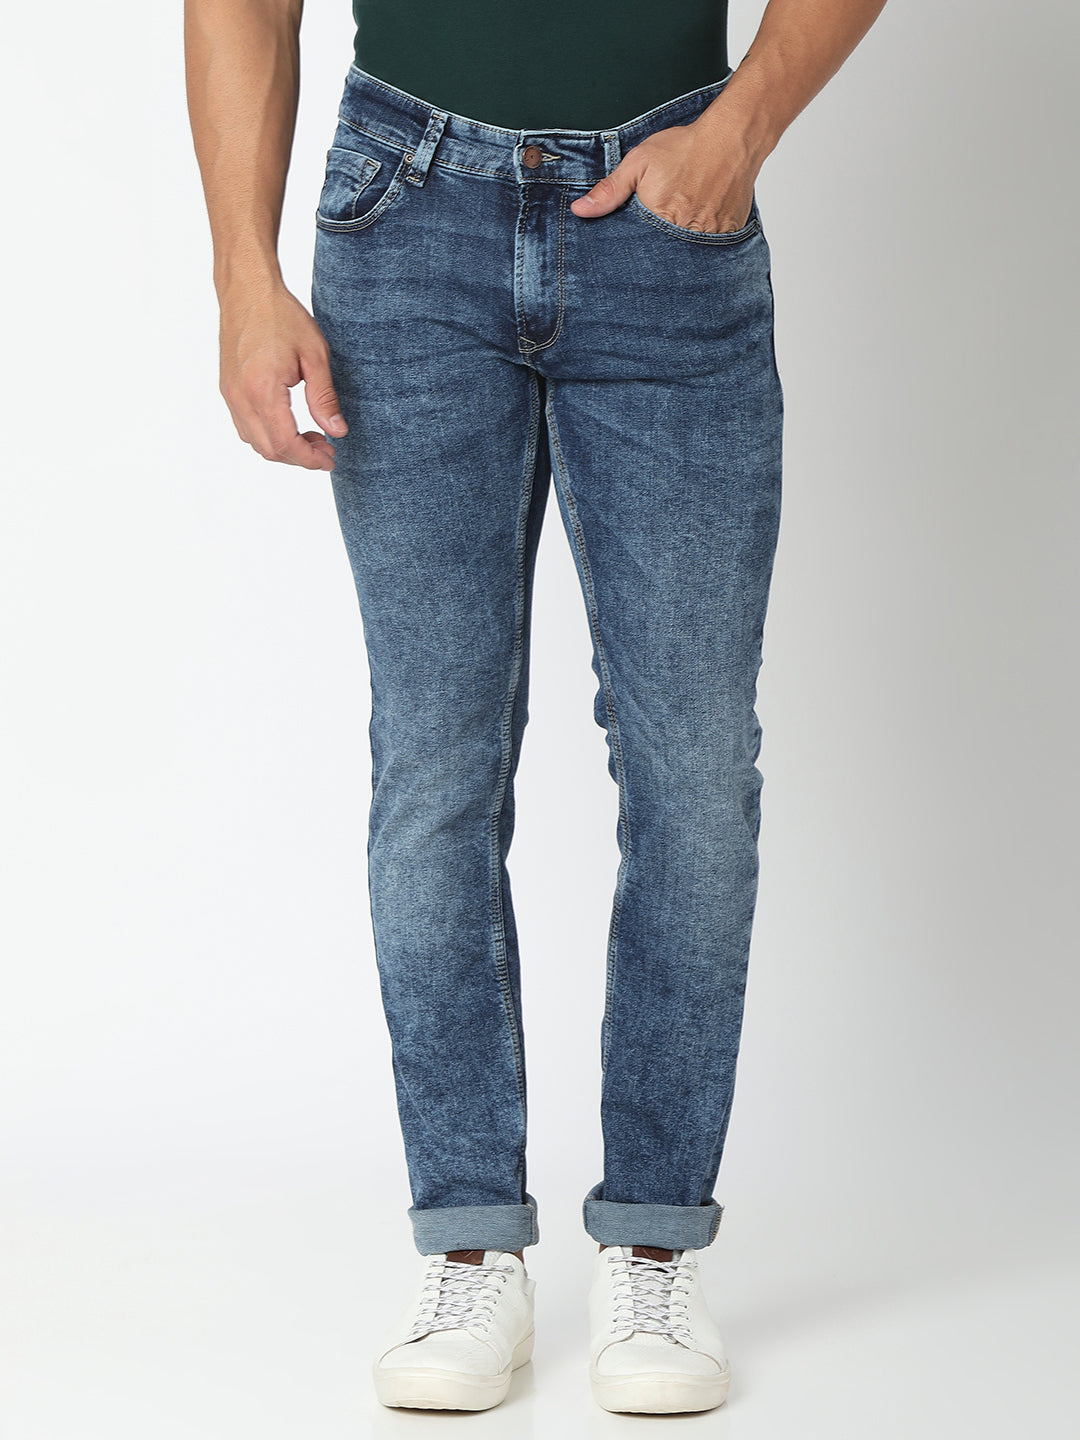 Spykar Raw Blue Cotton Regular Fit Narrow Length Jeans For Men (Rover) -  ro02bb14rawblue